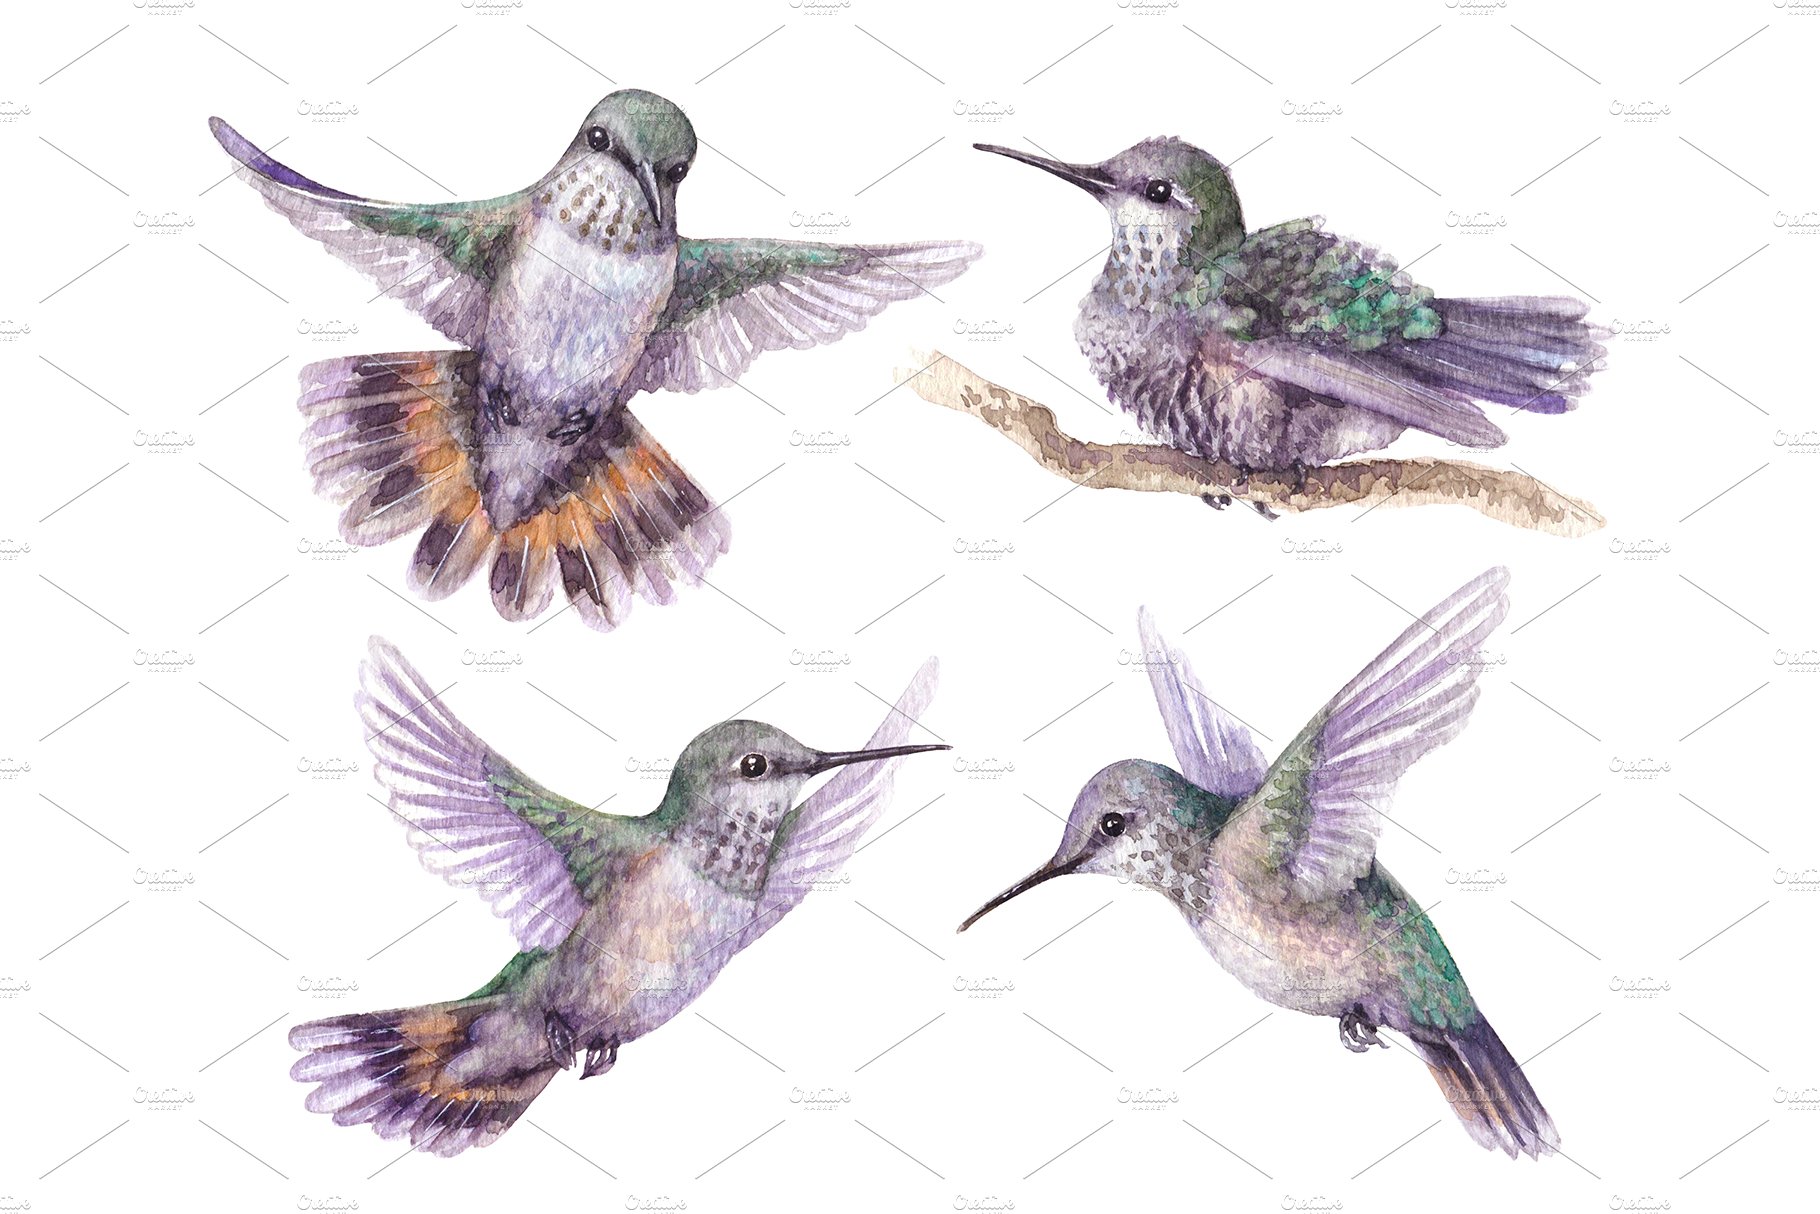 Watercolor Hummingbirds cover image.